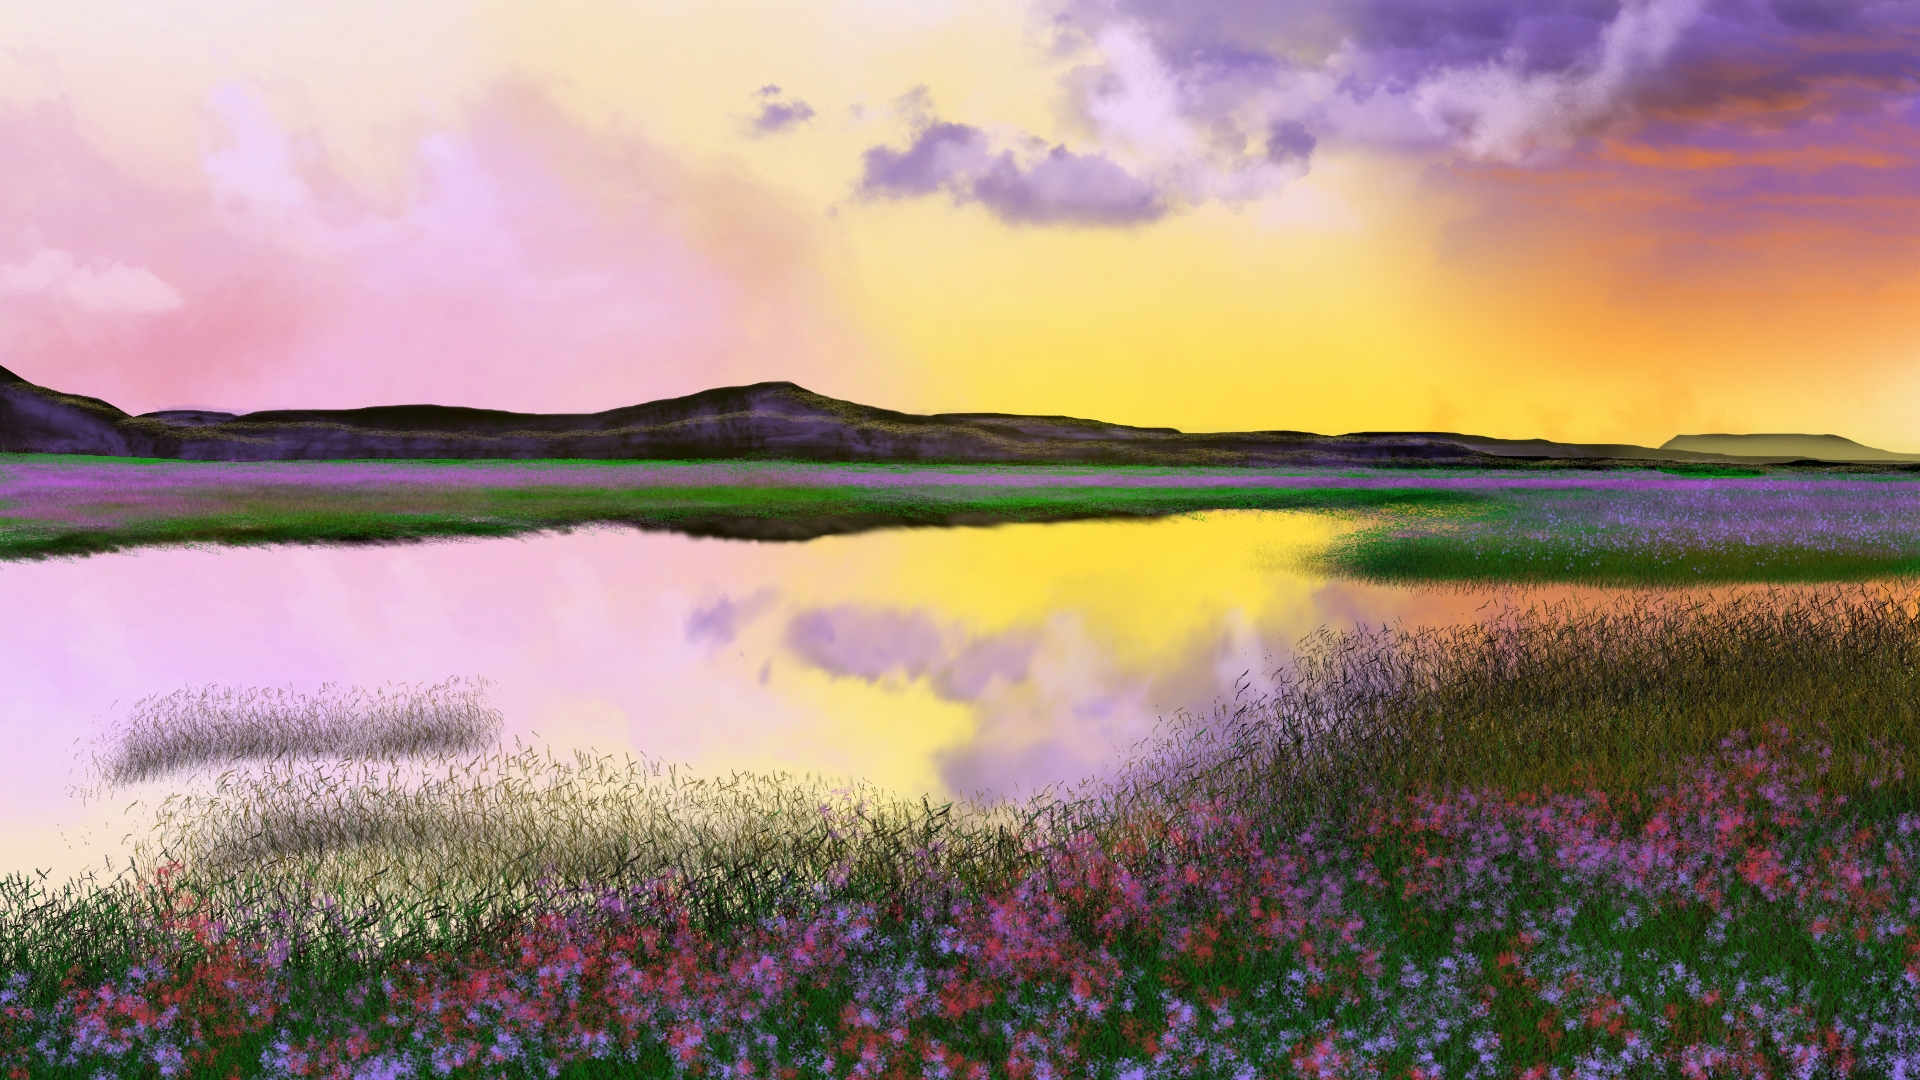 Digital Painting Digital Art Nature Landscape Colorful Marsh 1920x1080